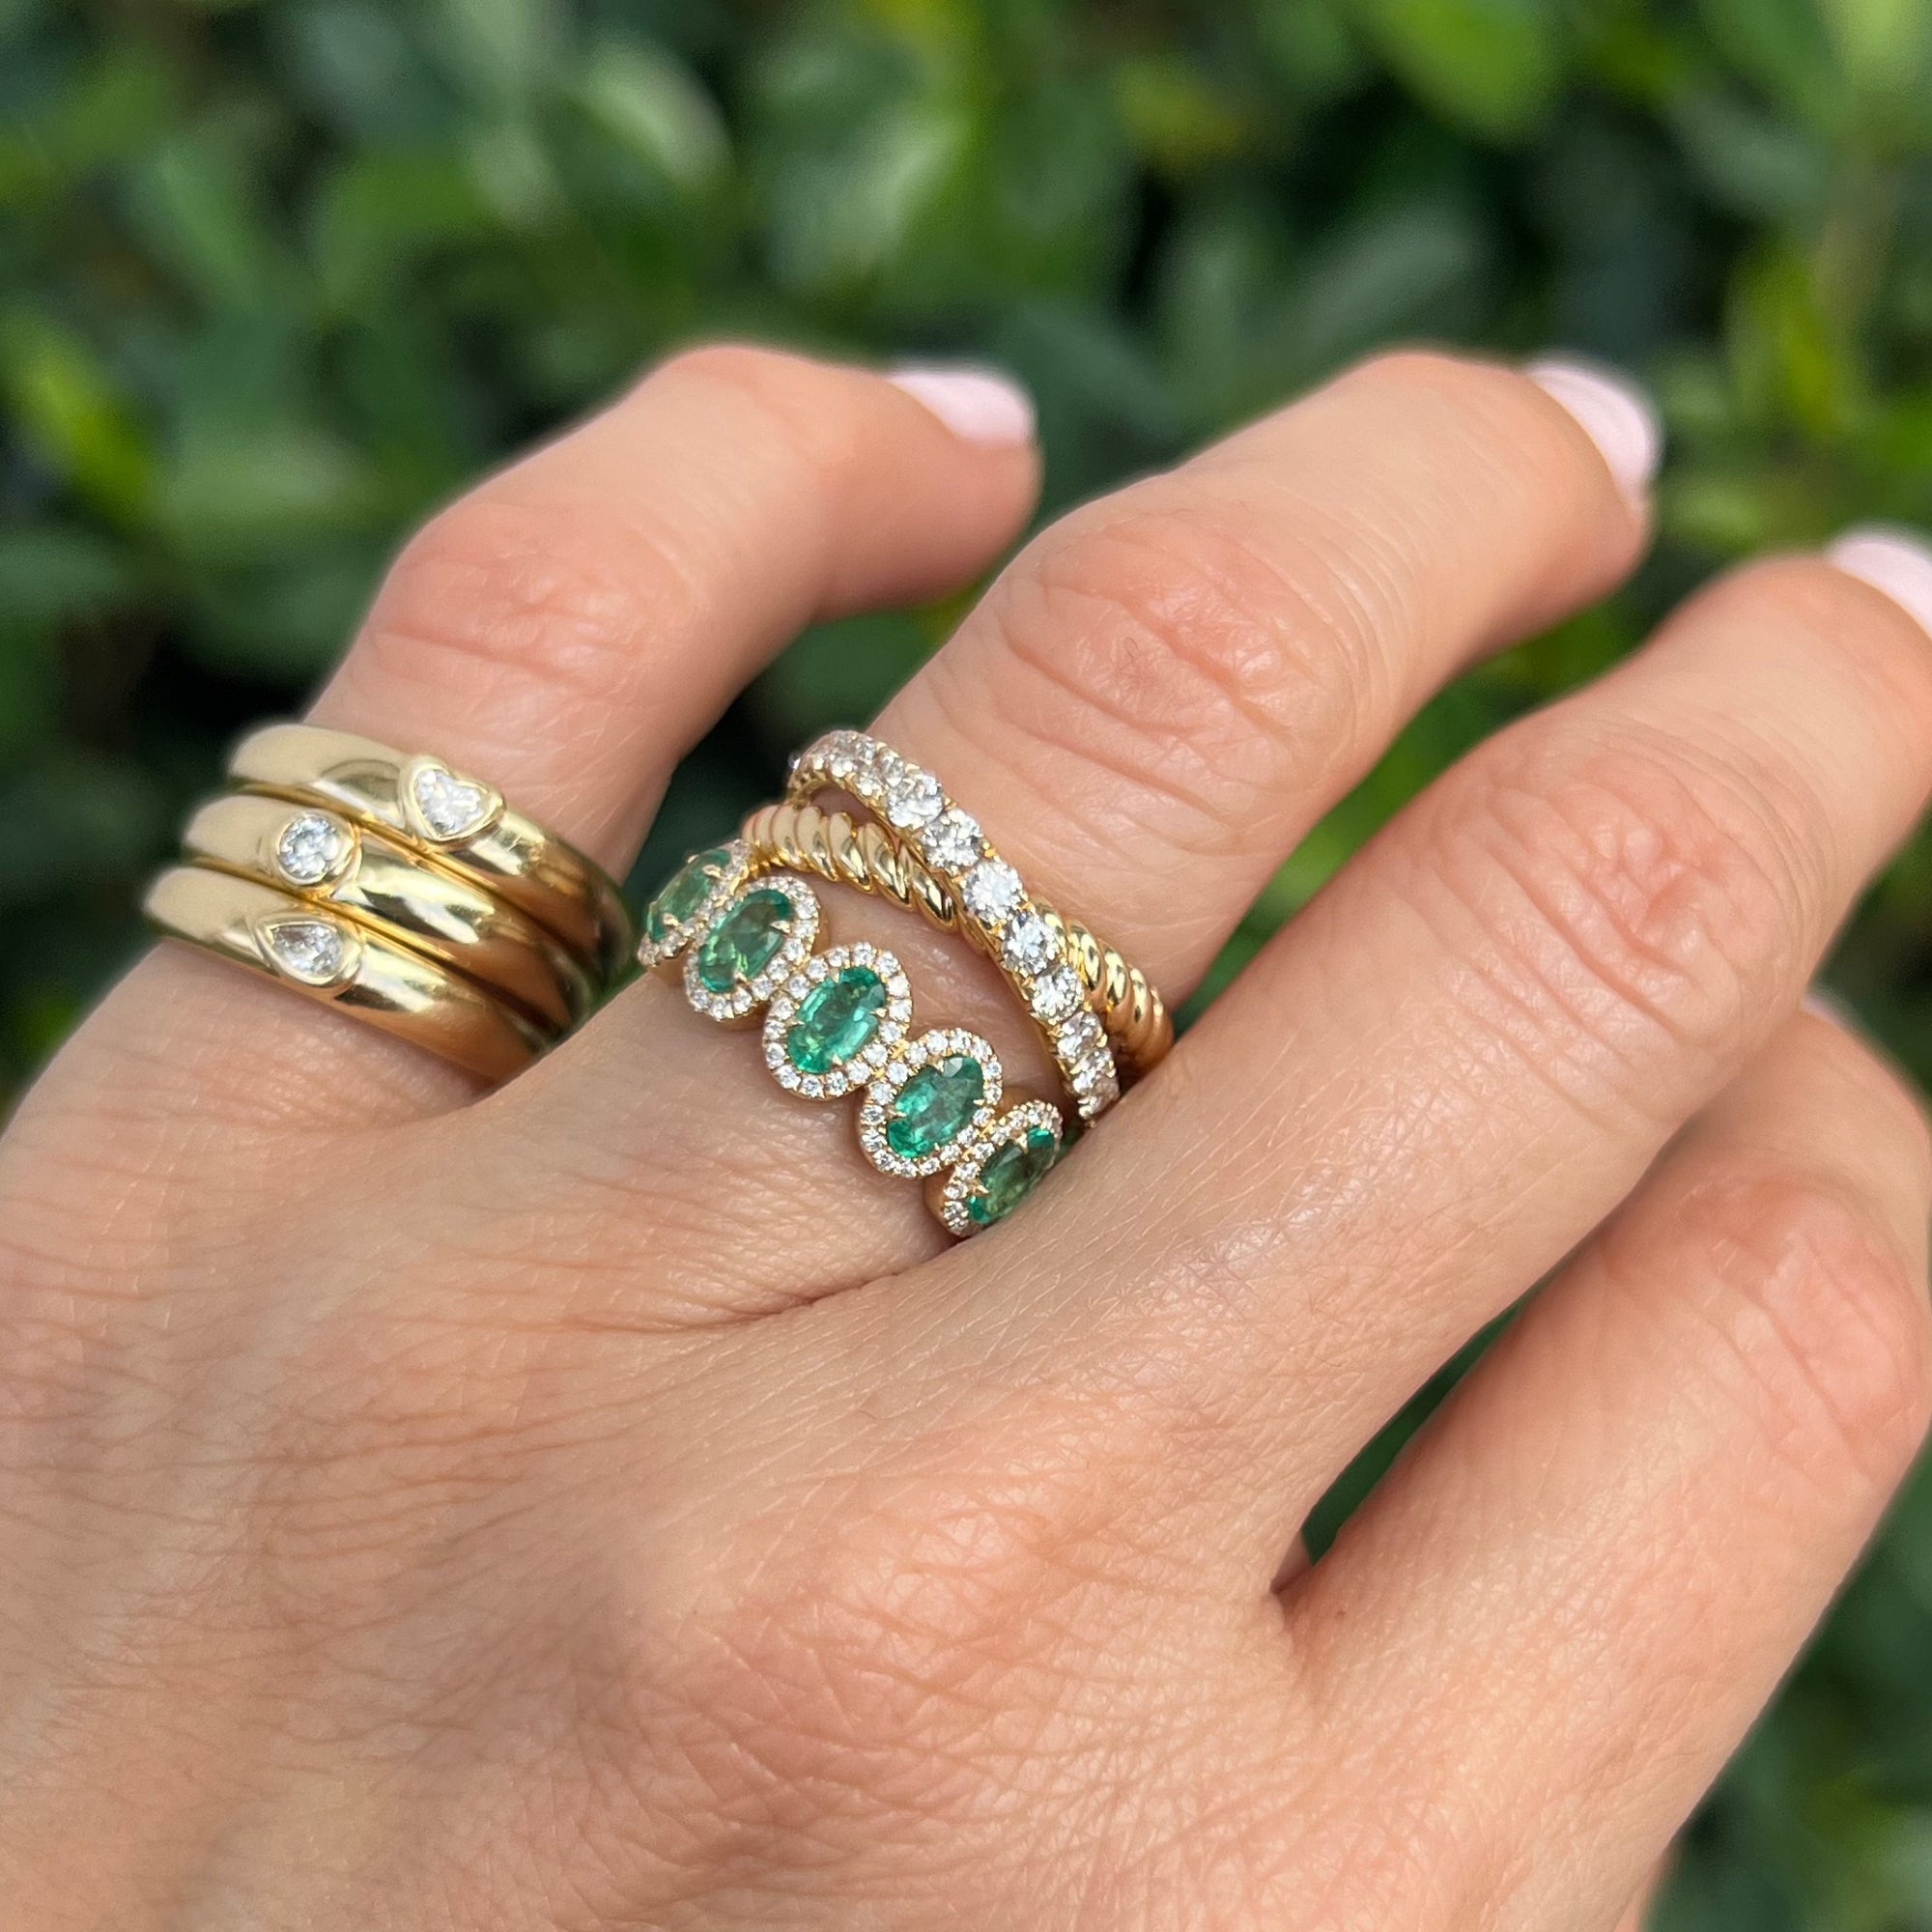 Kaleina Diamond Wedding Ring For Her Online Jewellery Shopping